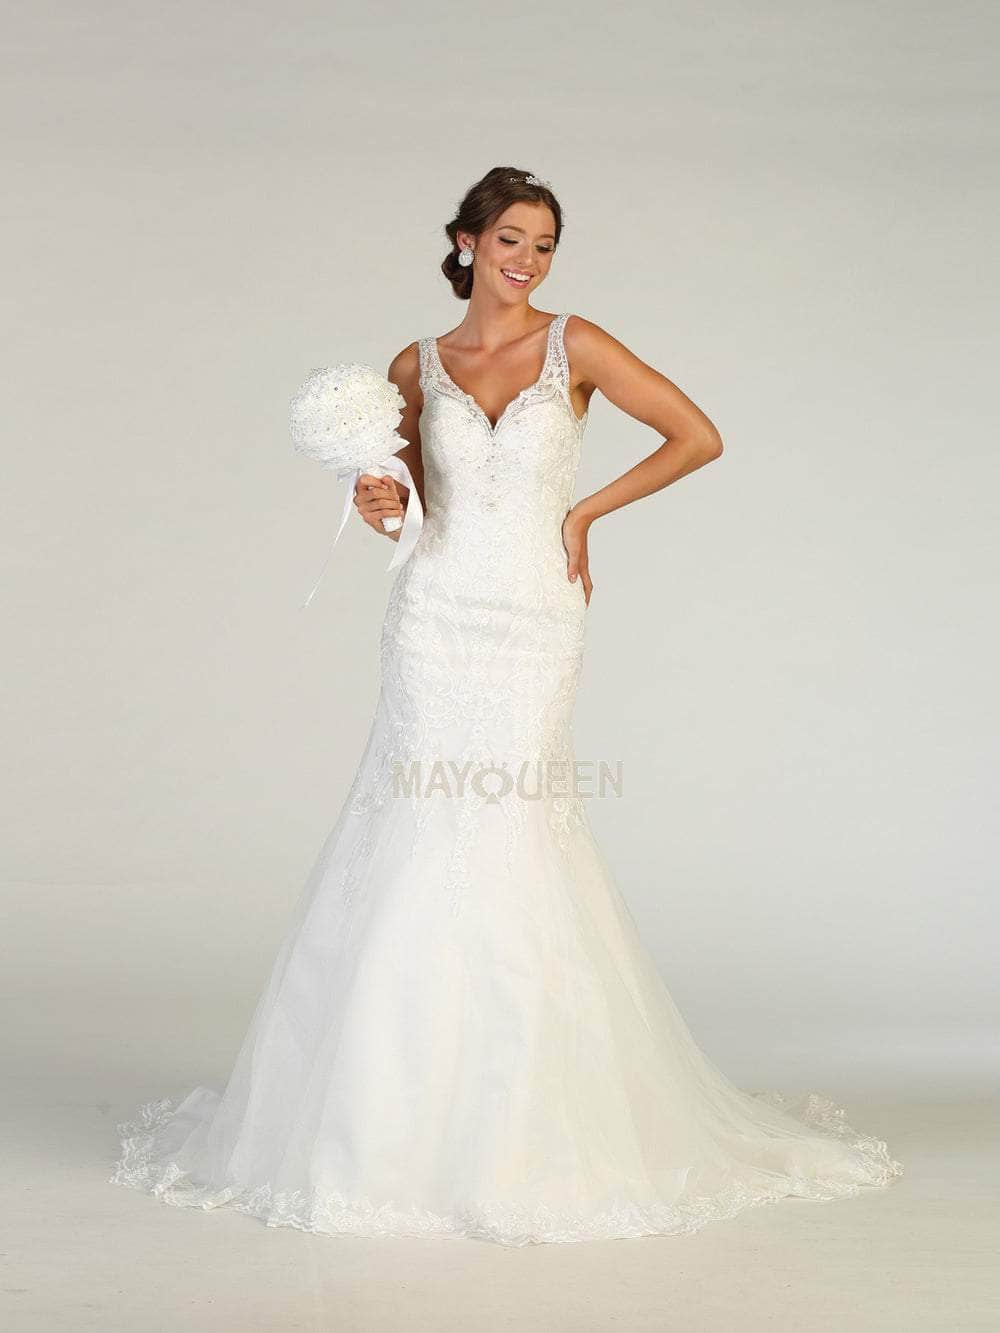 May Queen Bridal RQ7798 - Brocade V Neck Bridal Dress Special Occasion Dress